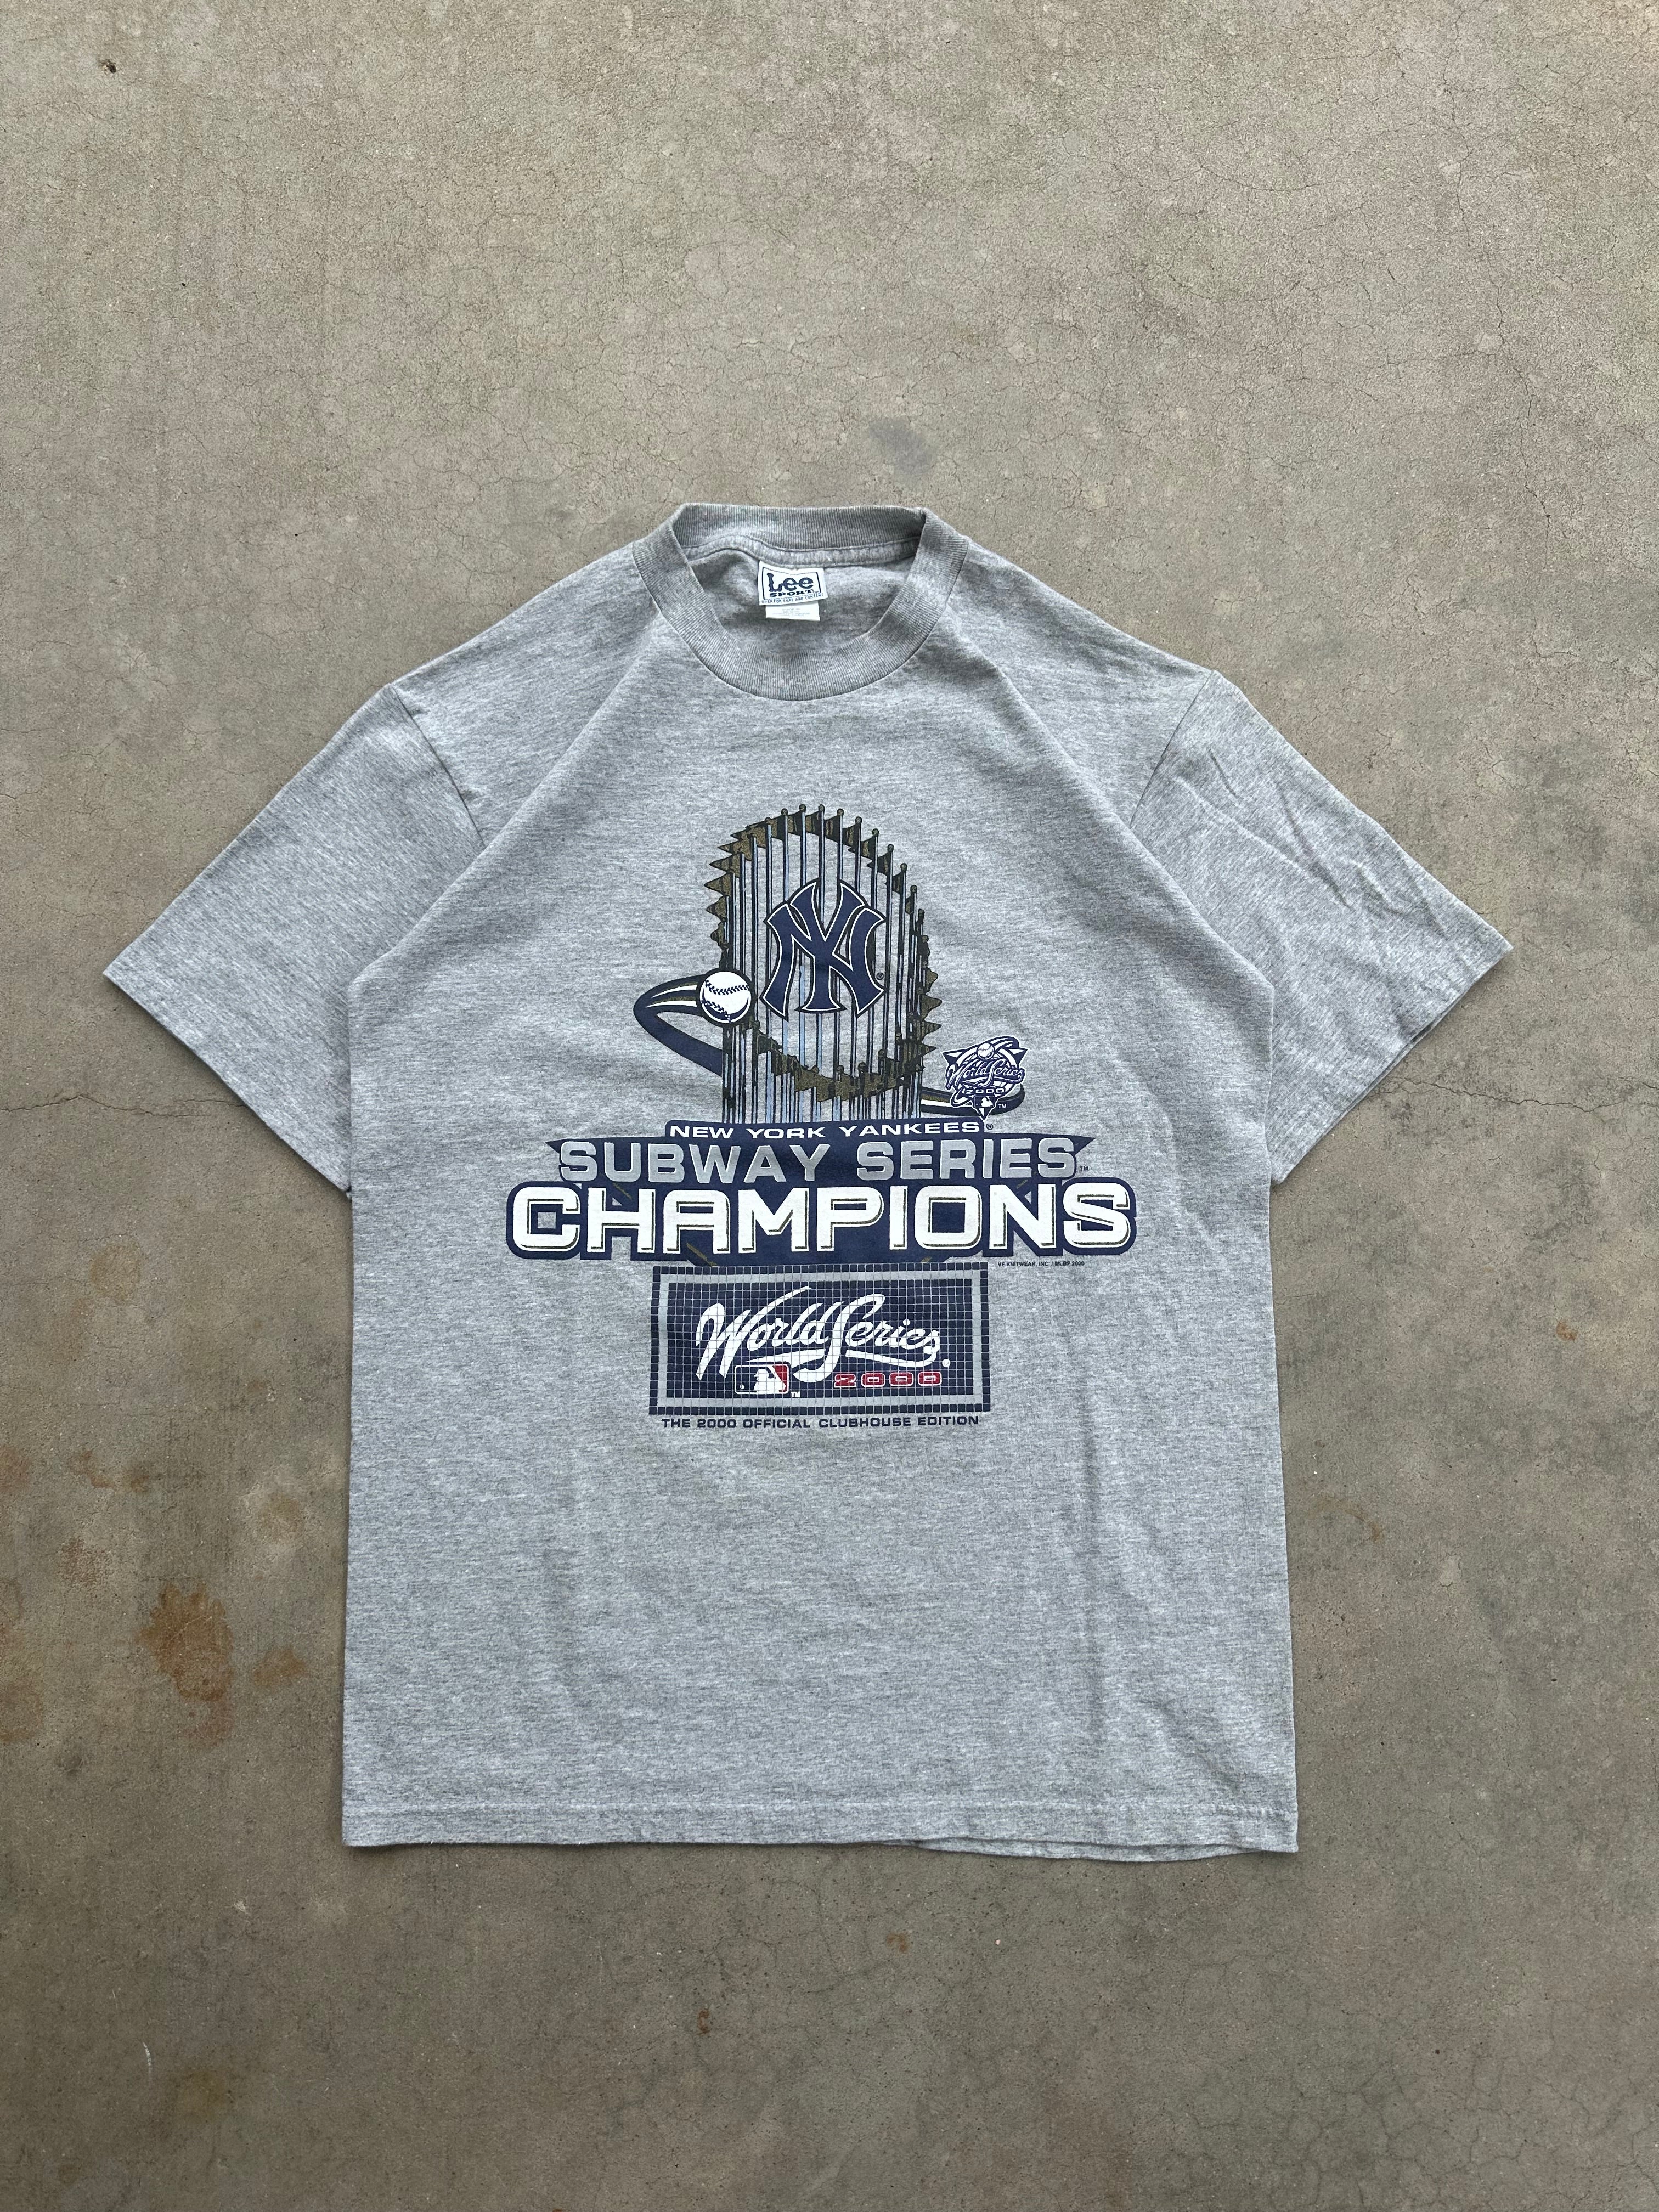 2000 Subway Series Champions New Your Yankees T-Shirt (M)